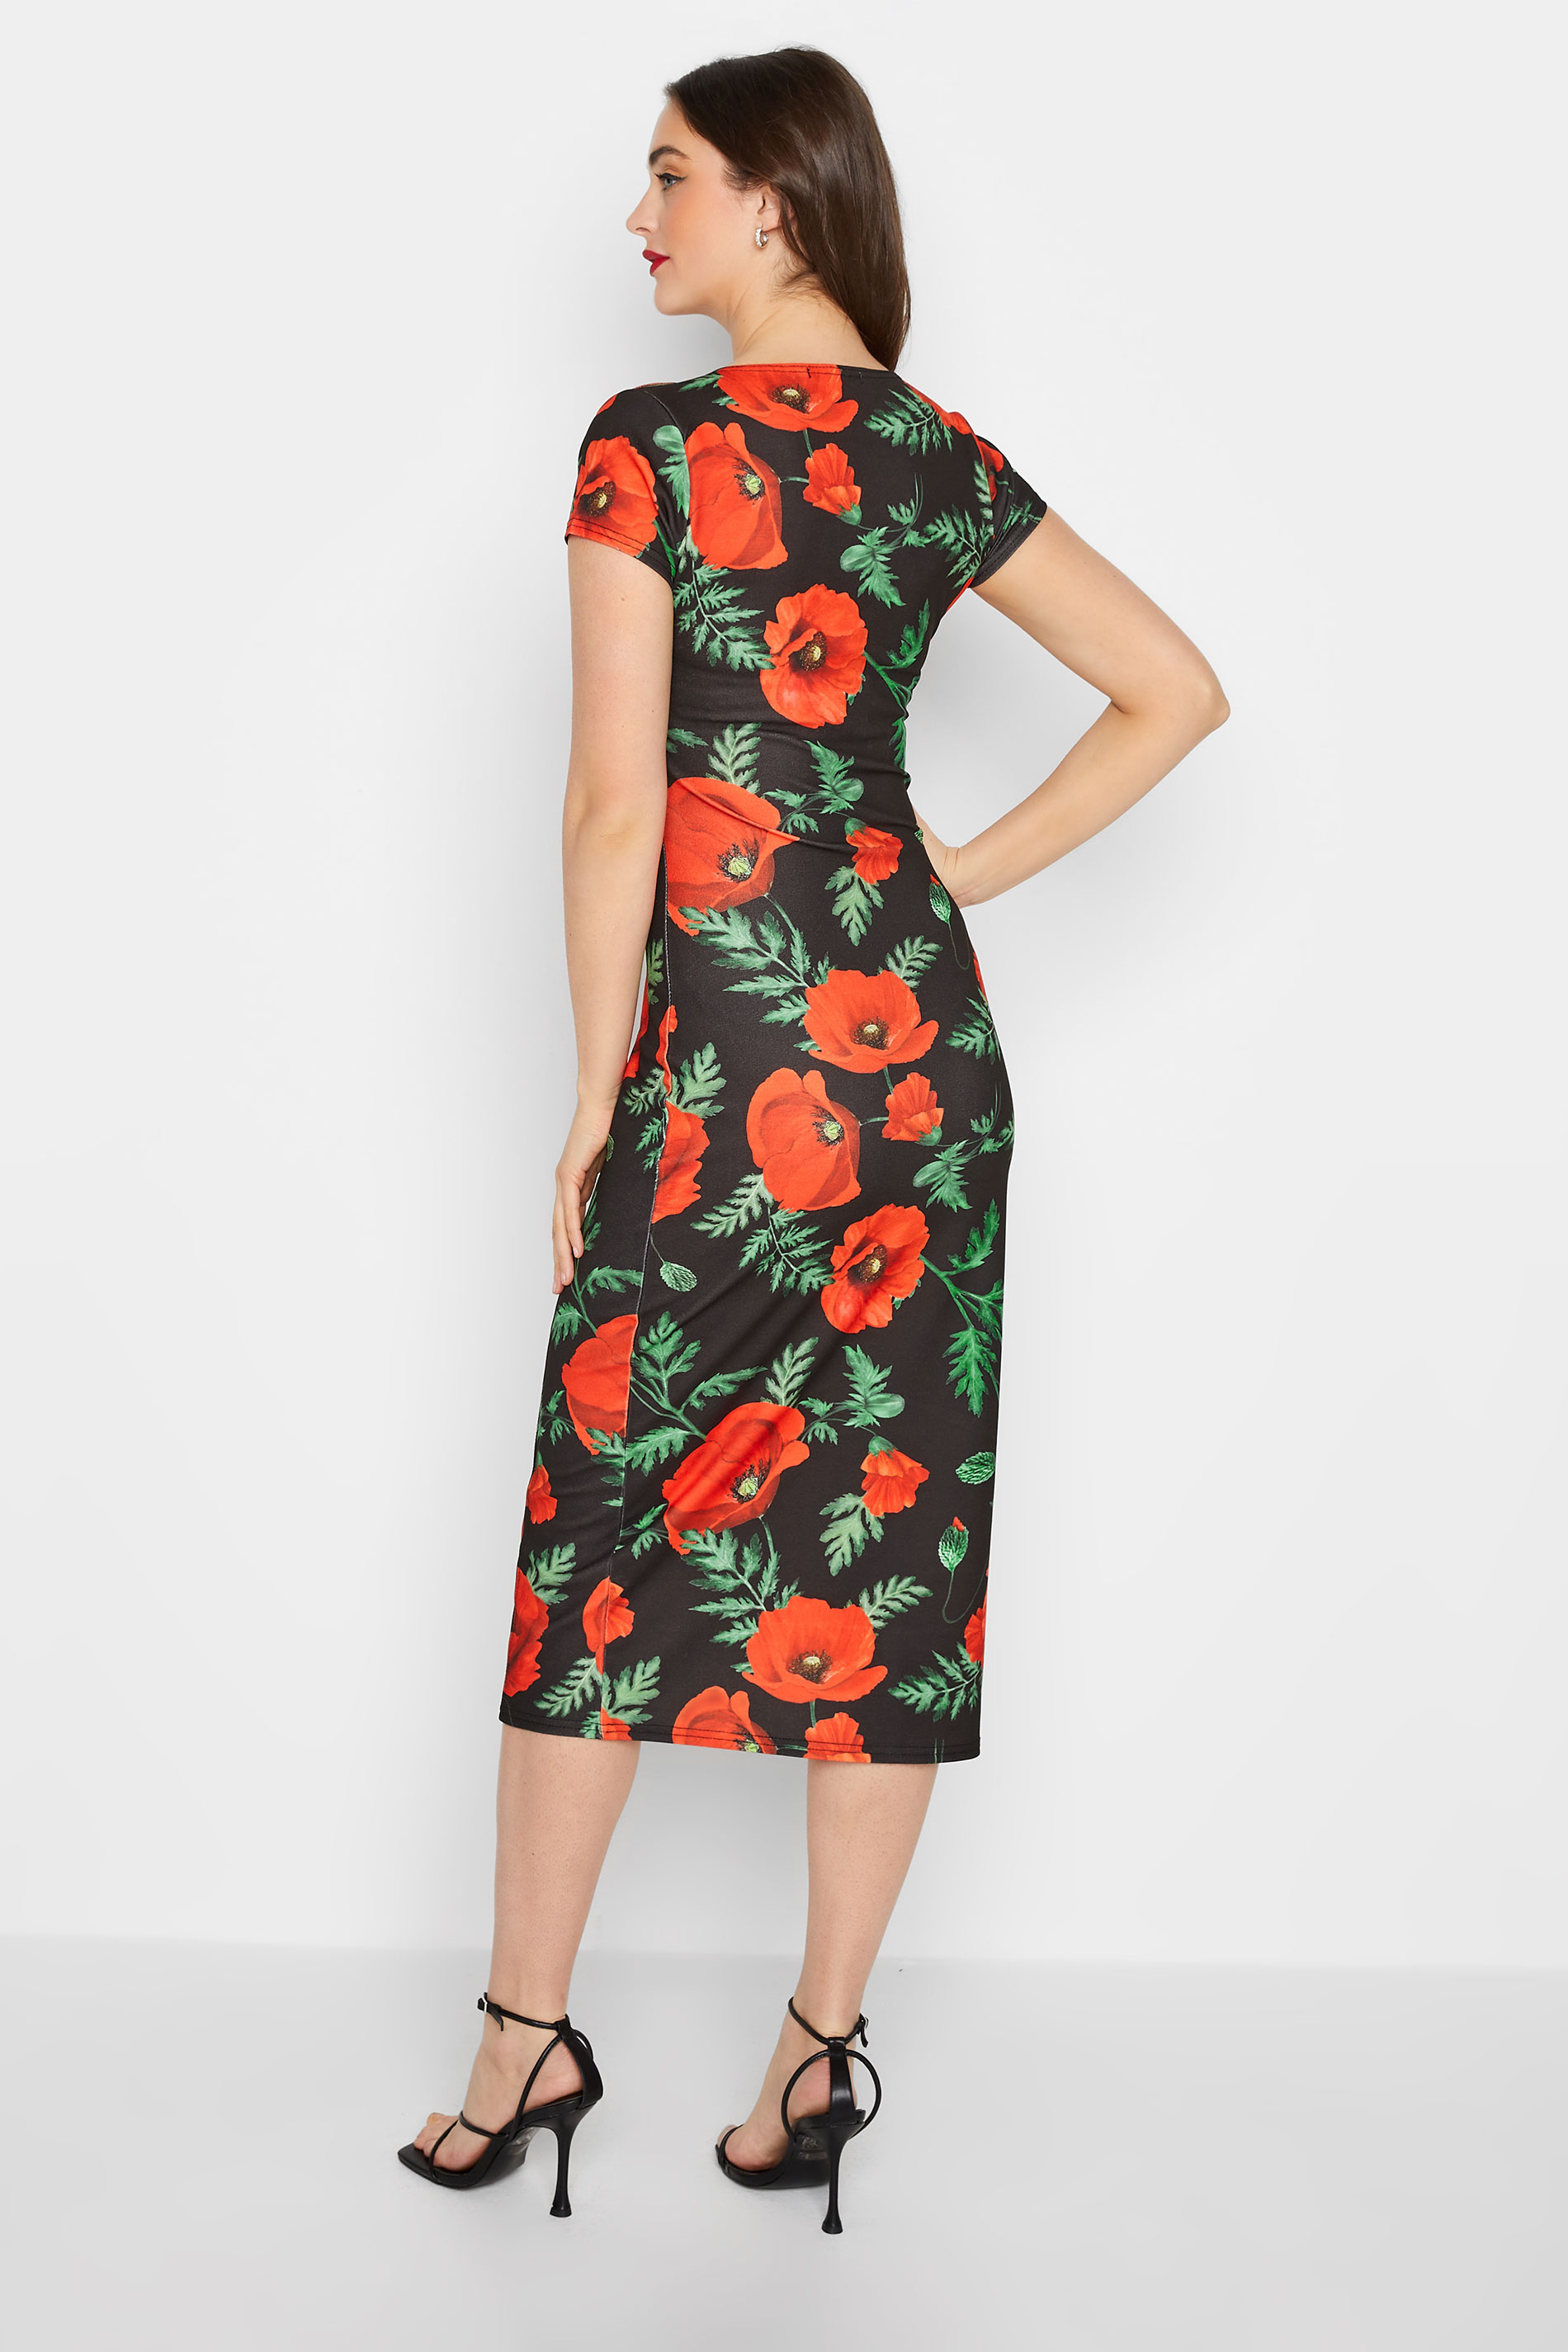 LTS Tall Women's Black Floral Print Corset Dress | Long Tall Sally 3